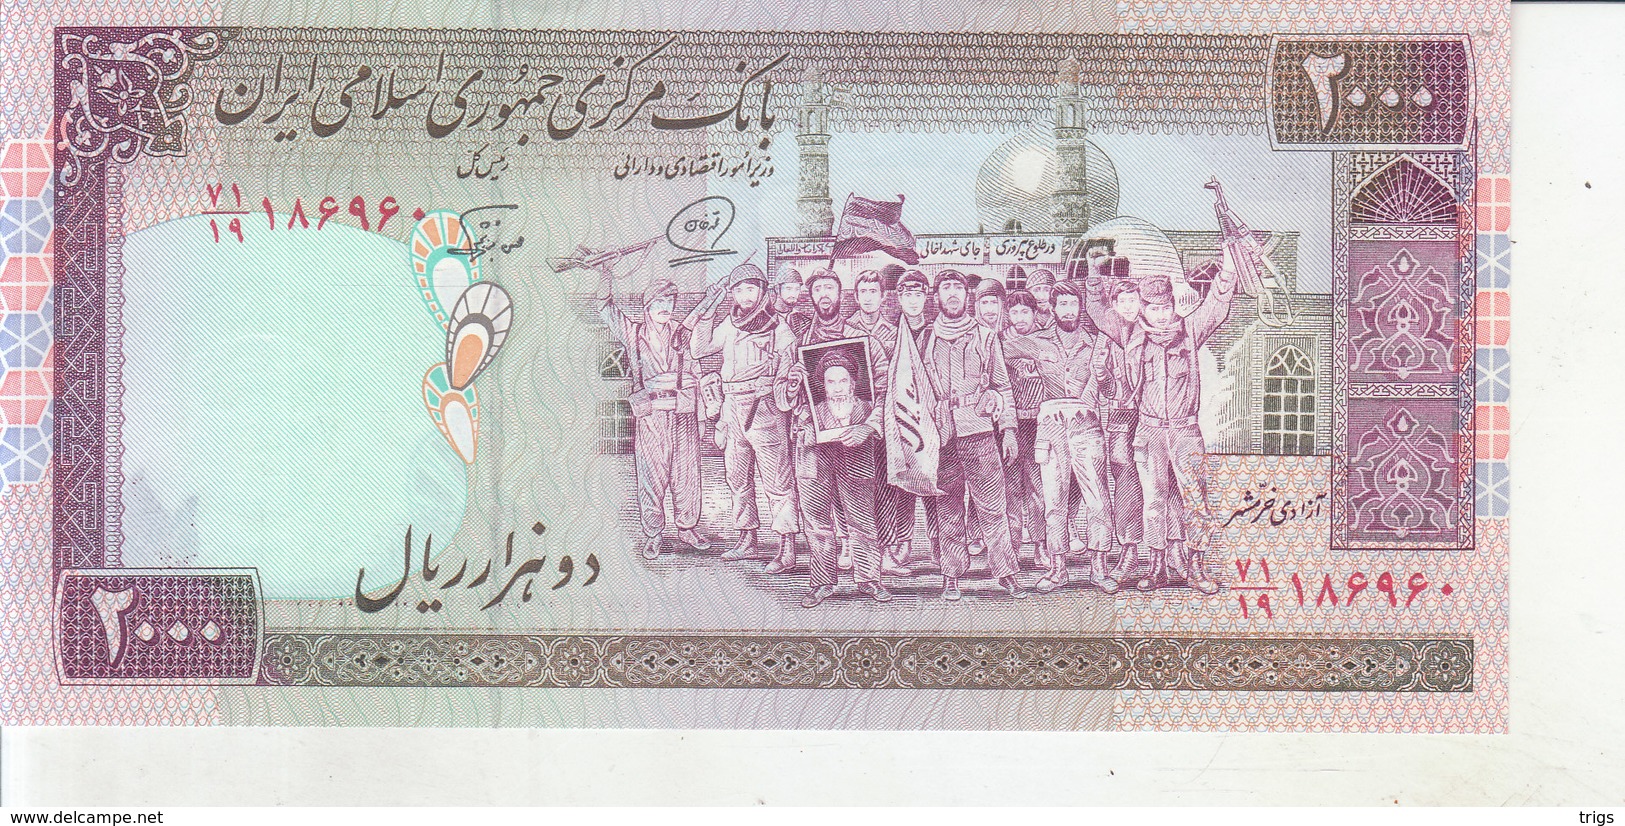 Iran - 2000 Rials - Iran